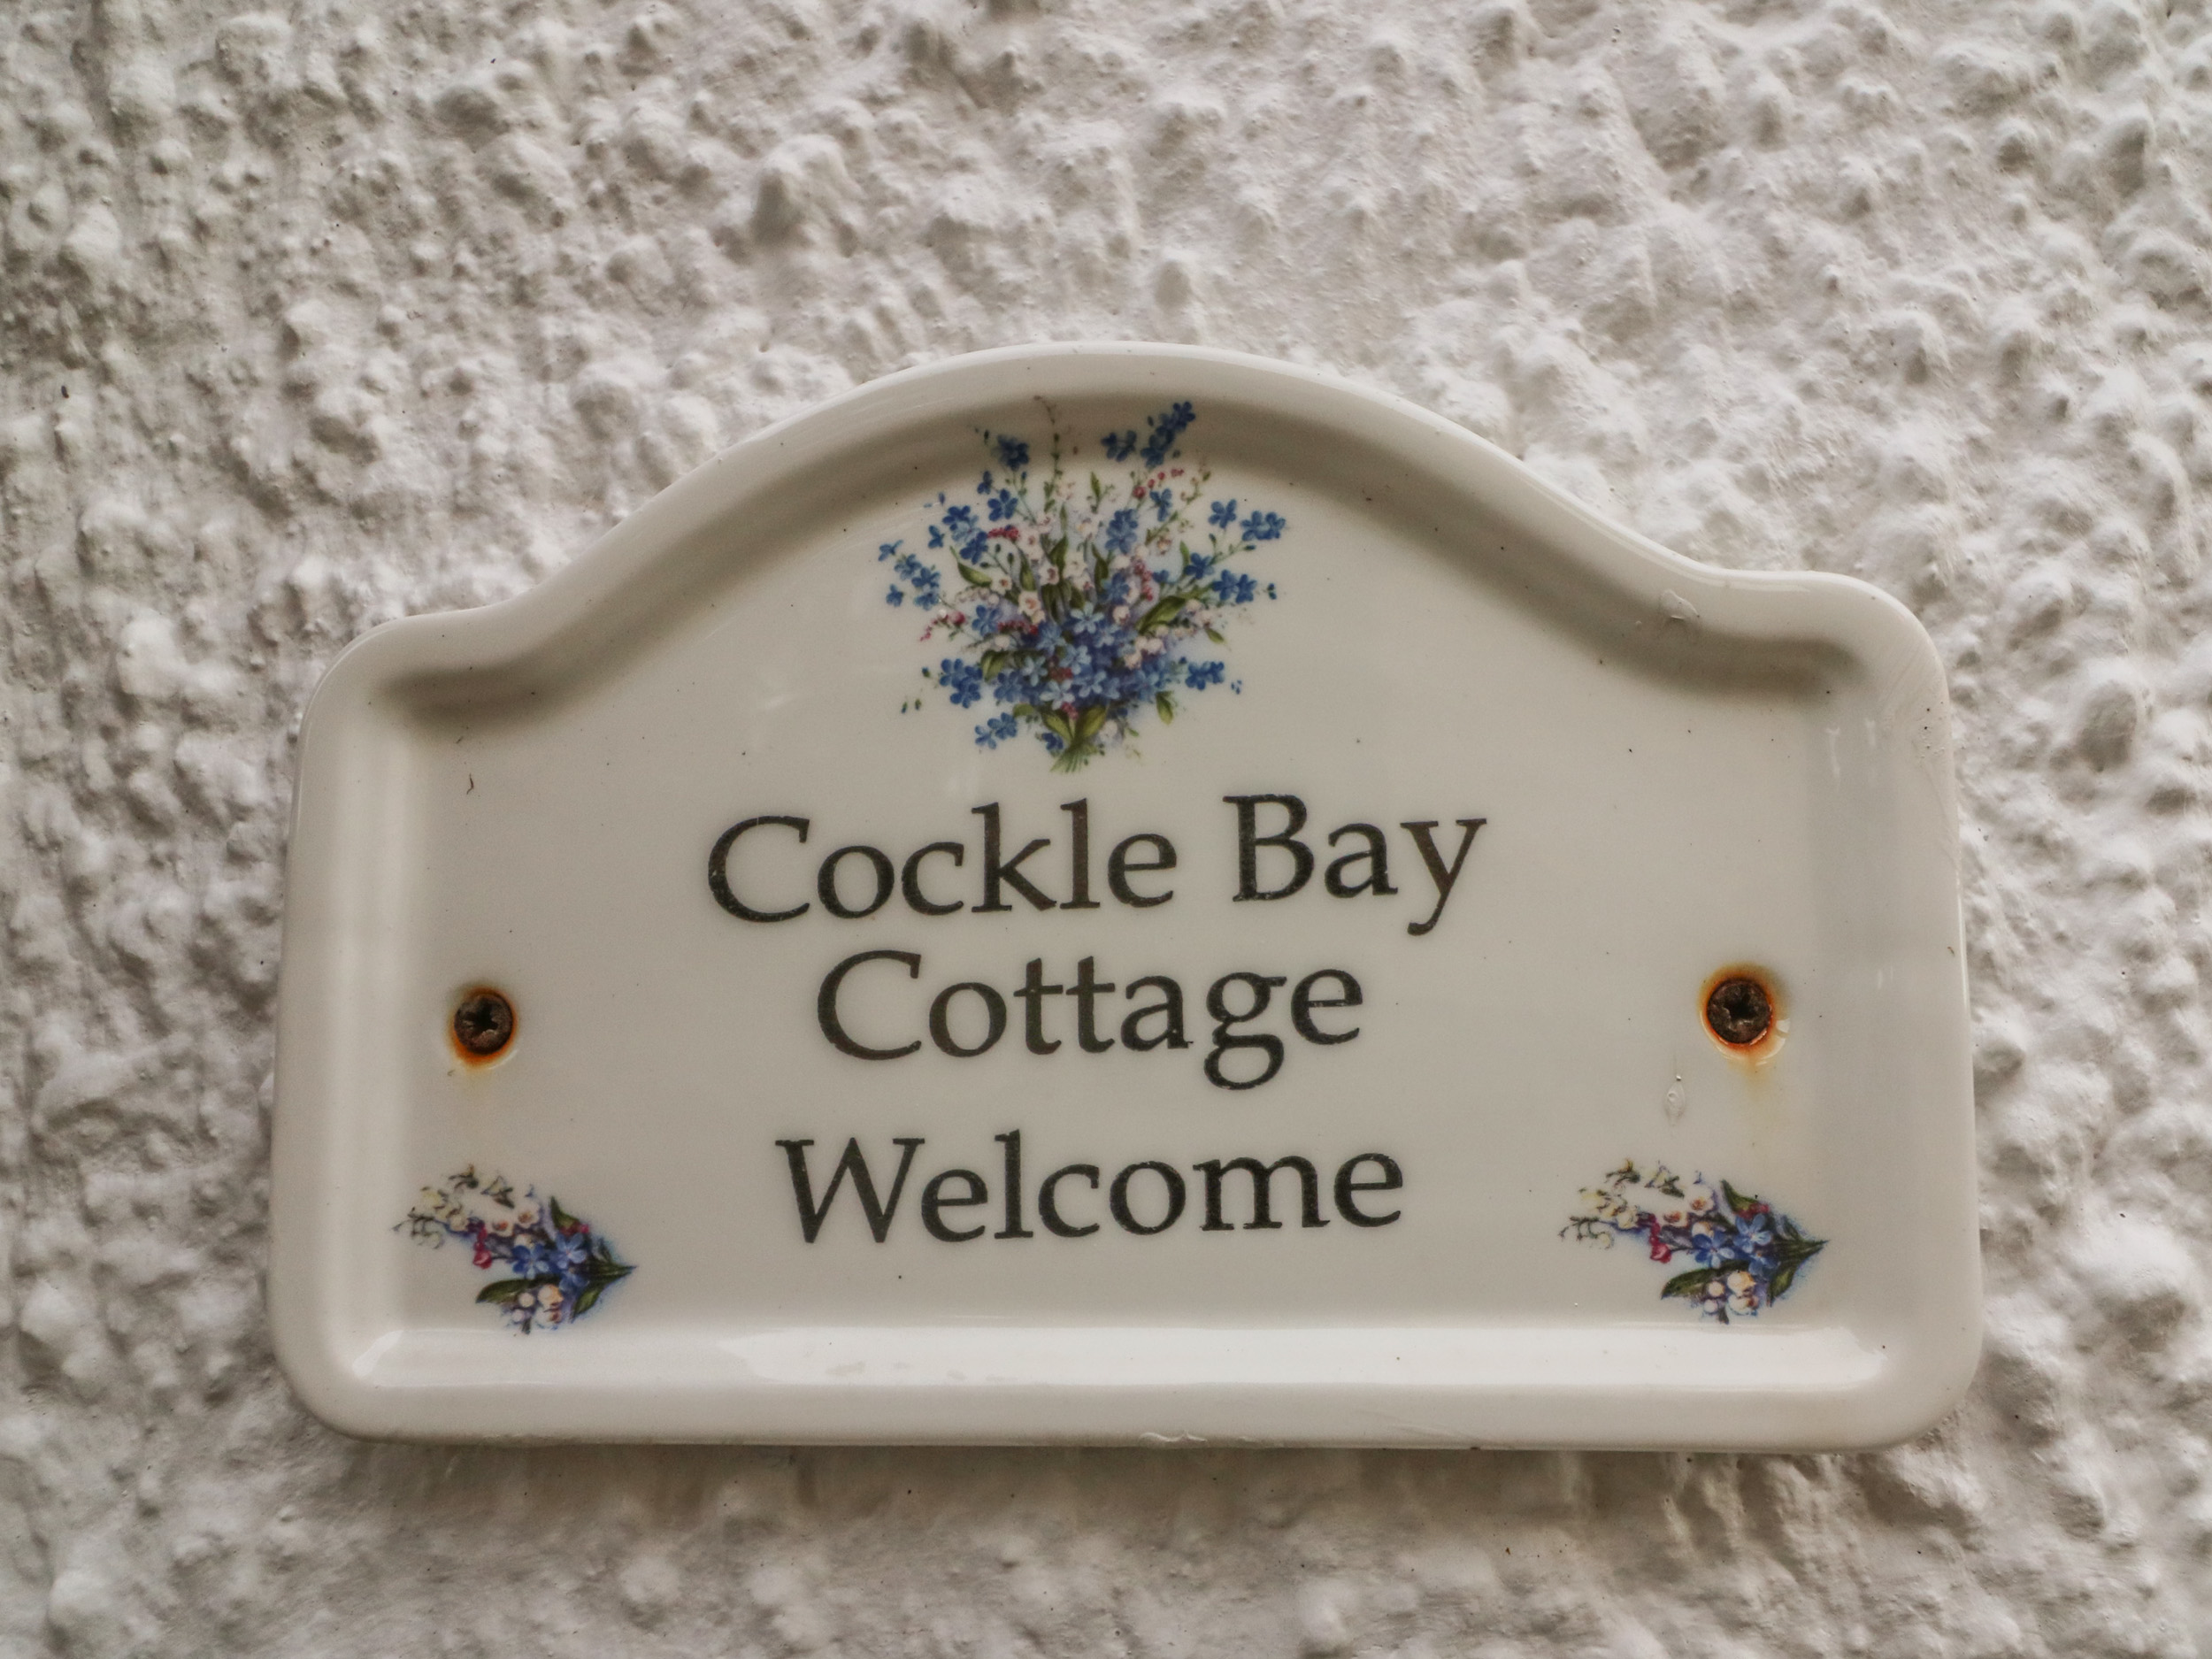 Cockle Bay Cottage, Heysham